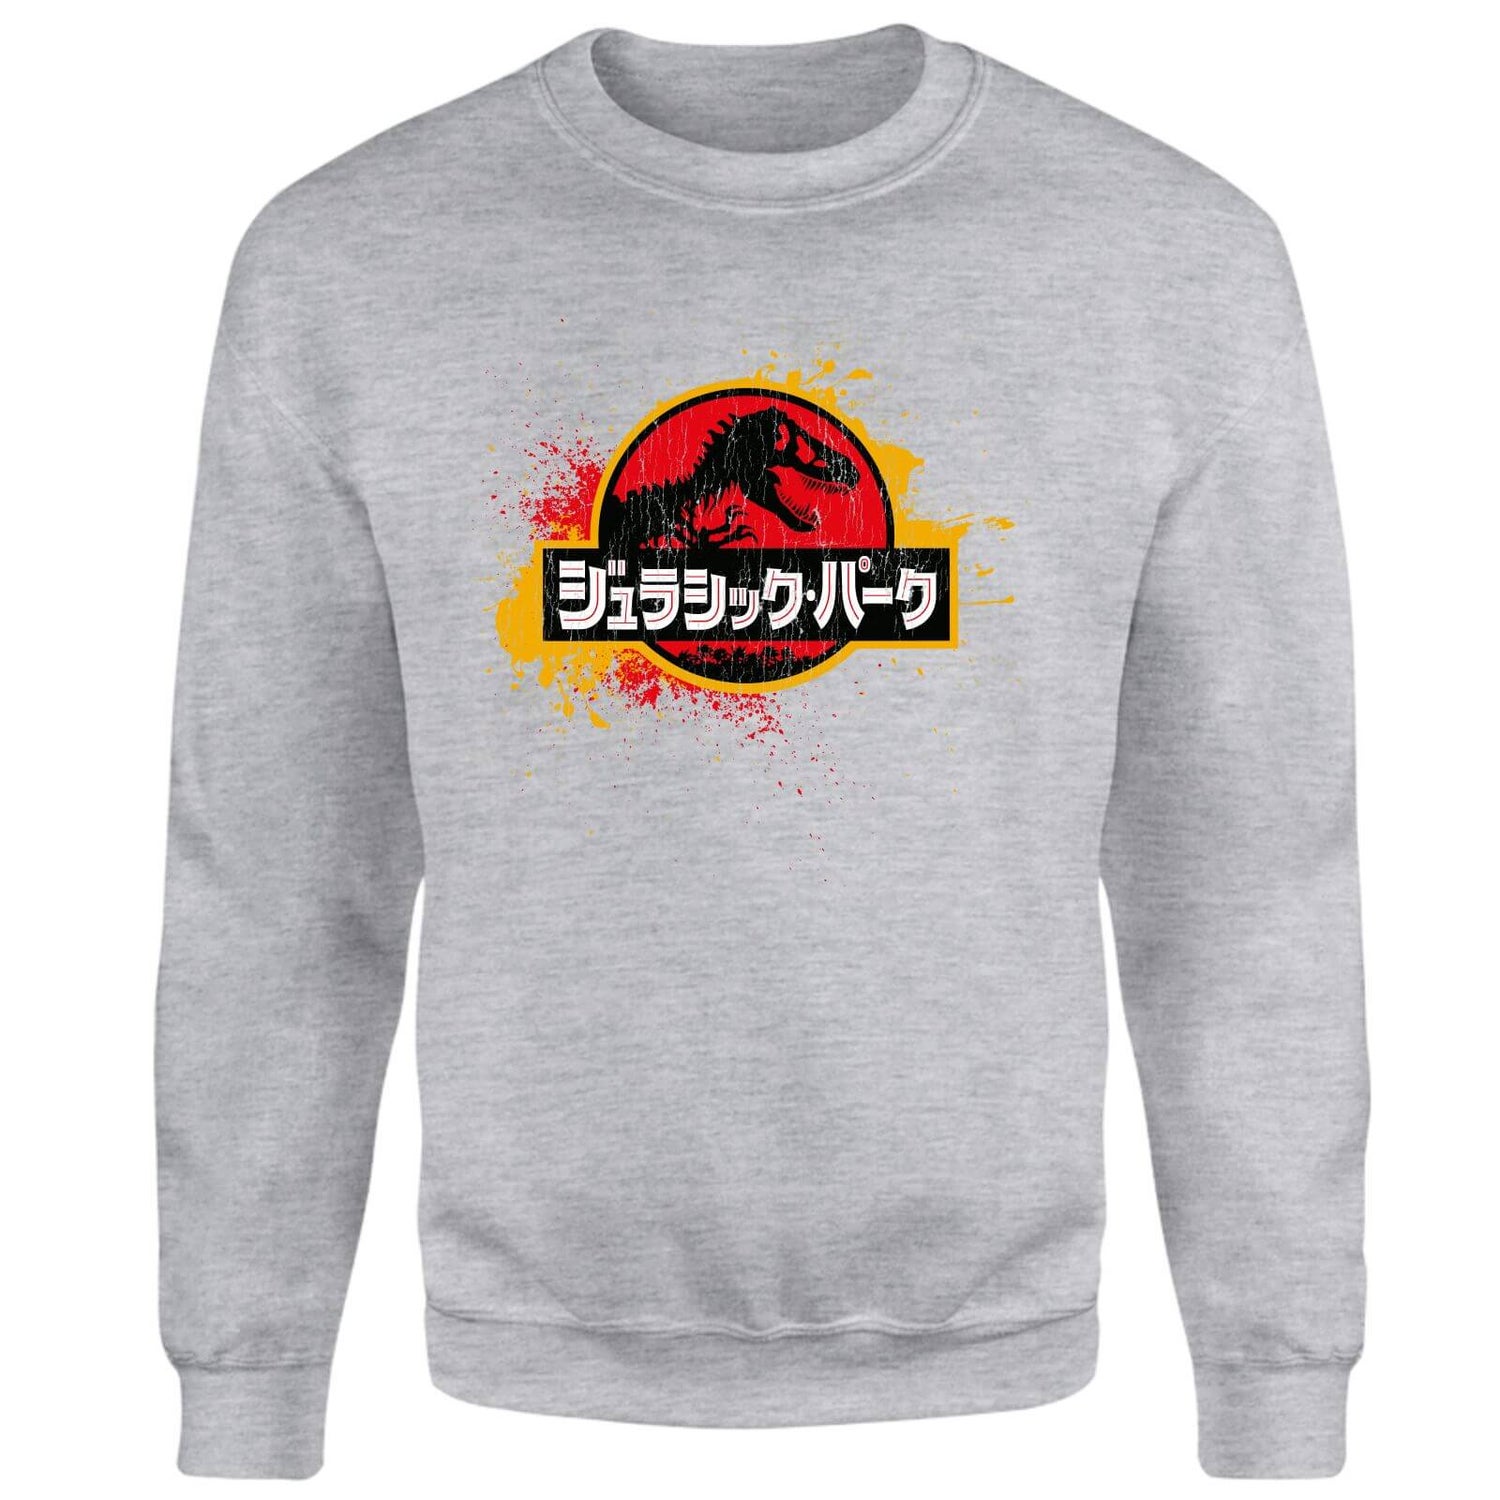 Jurassic Park Sweatshirt - Grey